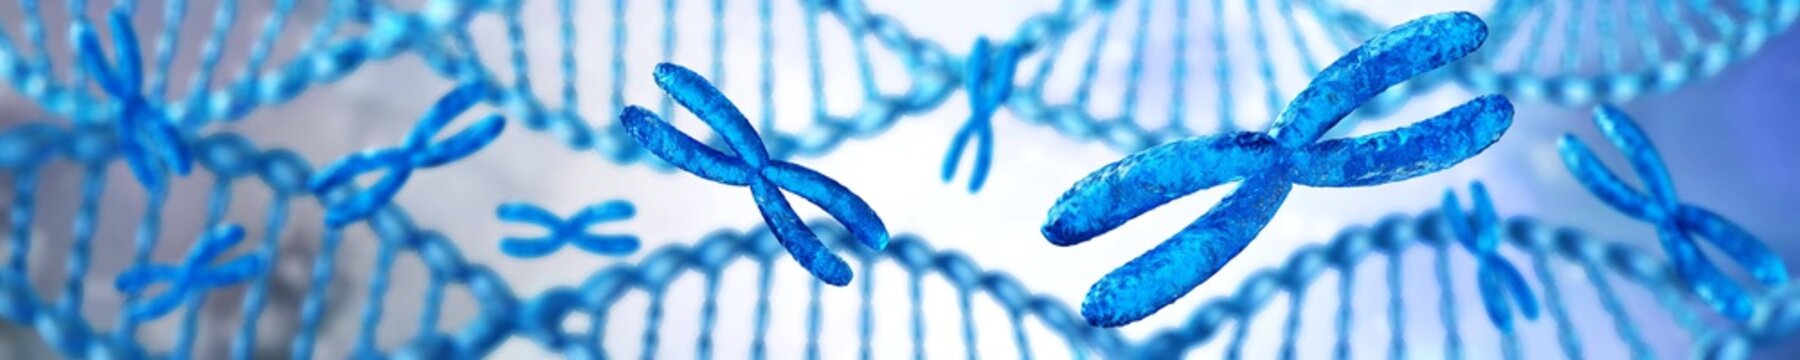 Chromosome against a background of blurred DNA. Banner.
3D rendering
